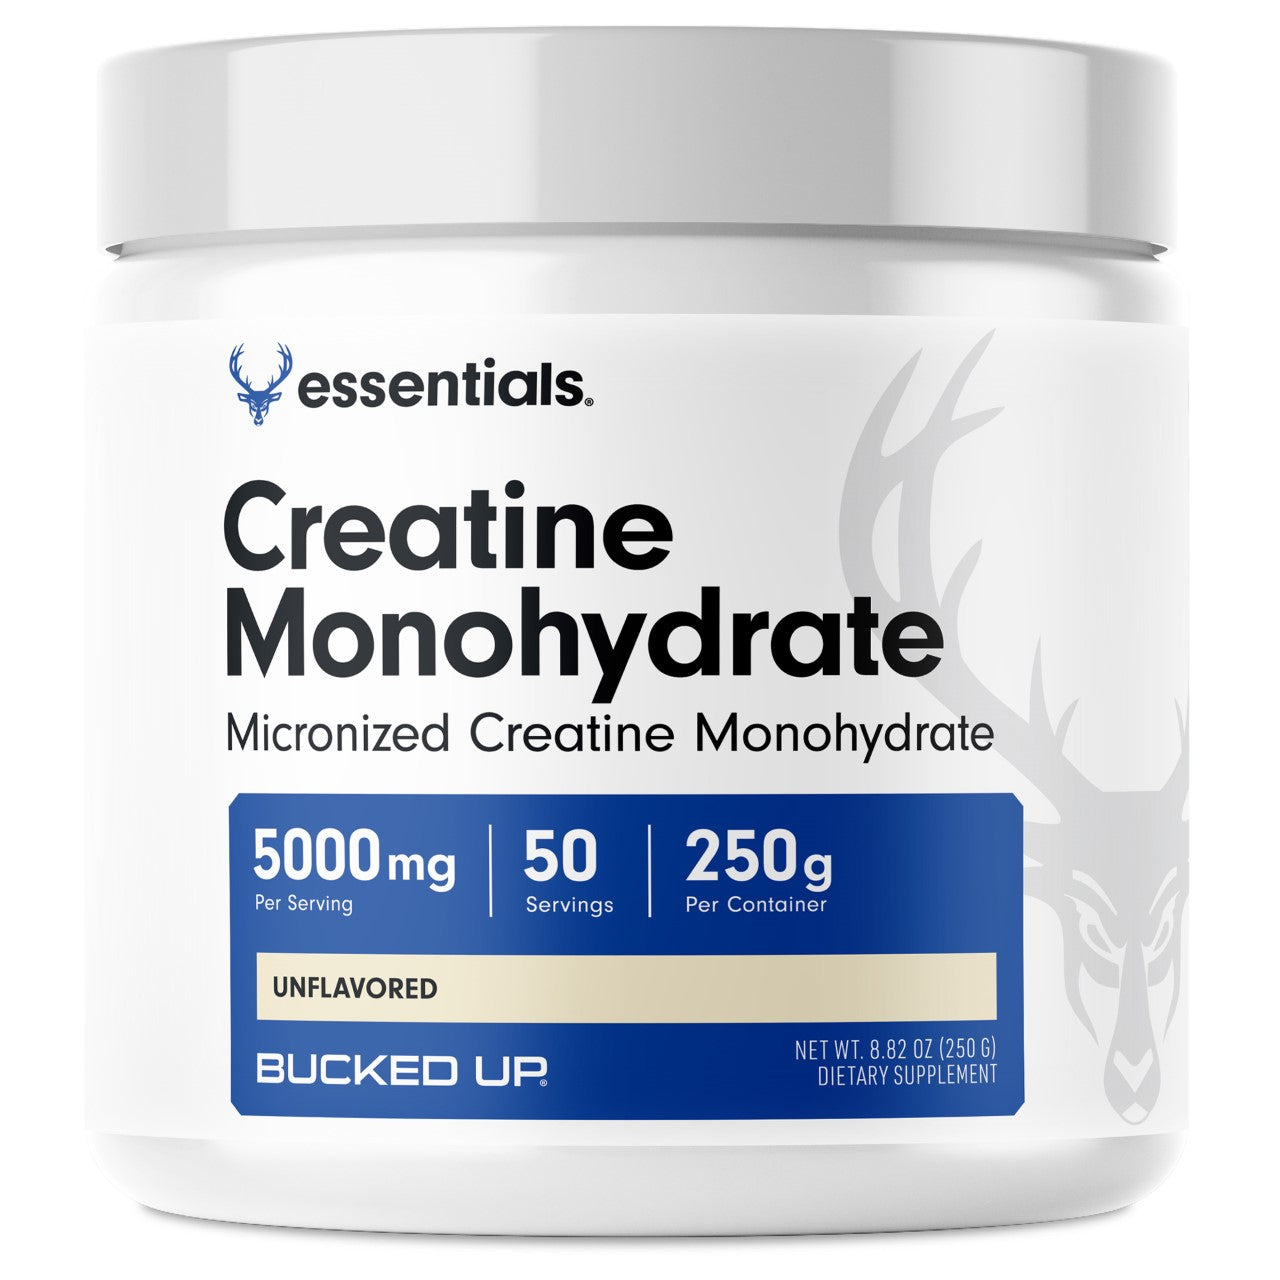 Bucked Up Micronized Creatine Monohydrate 250G